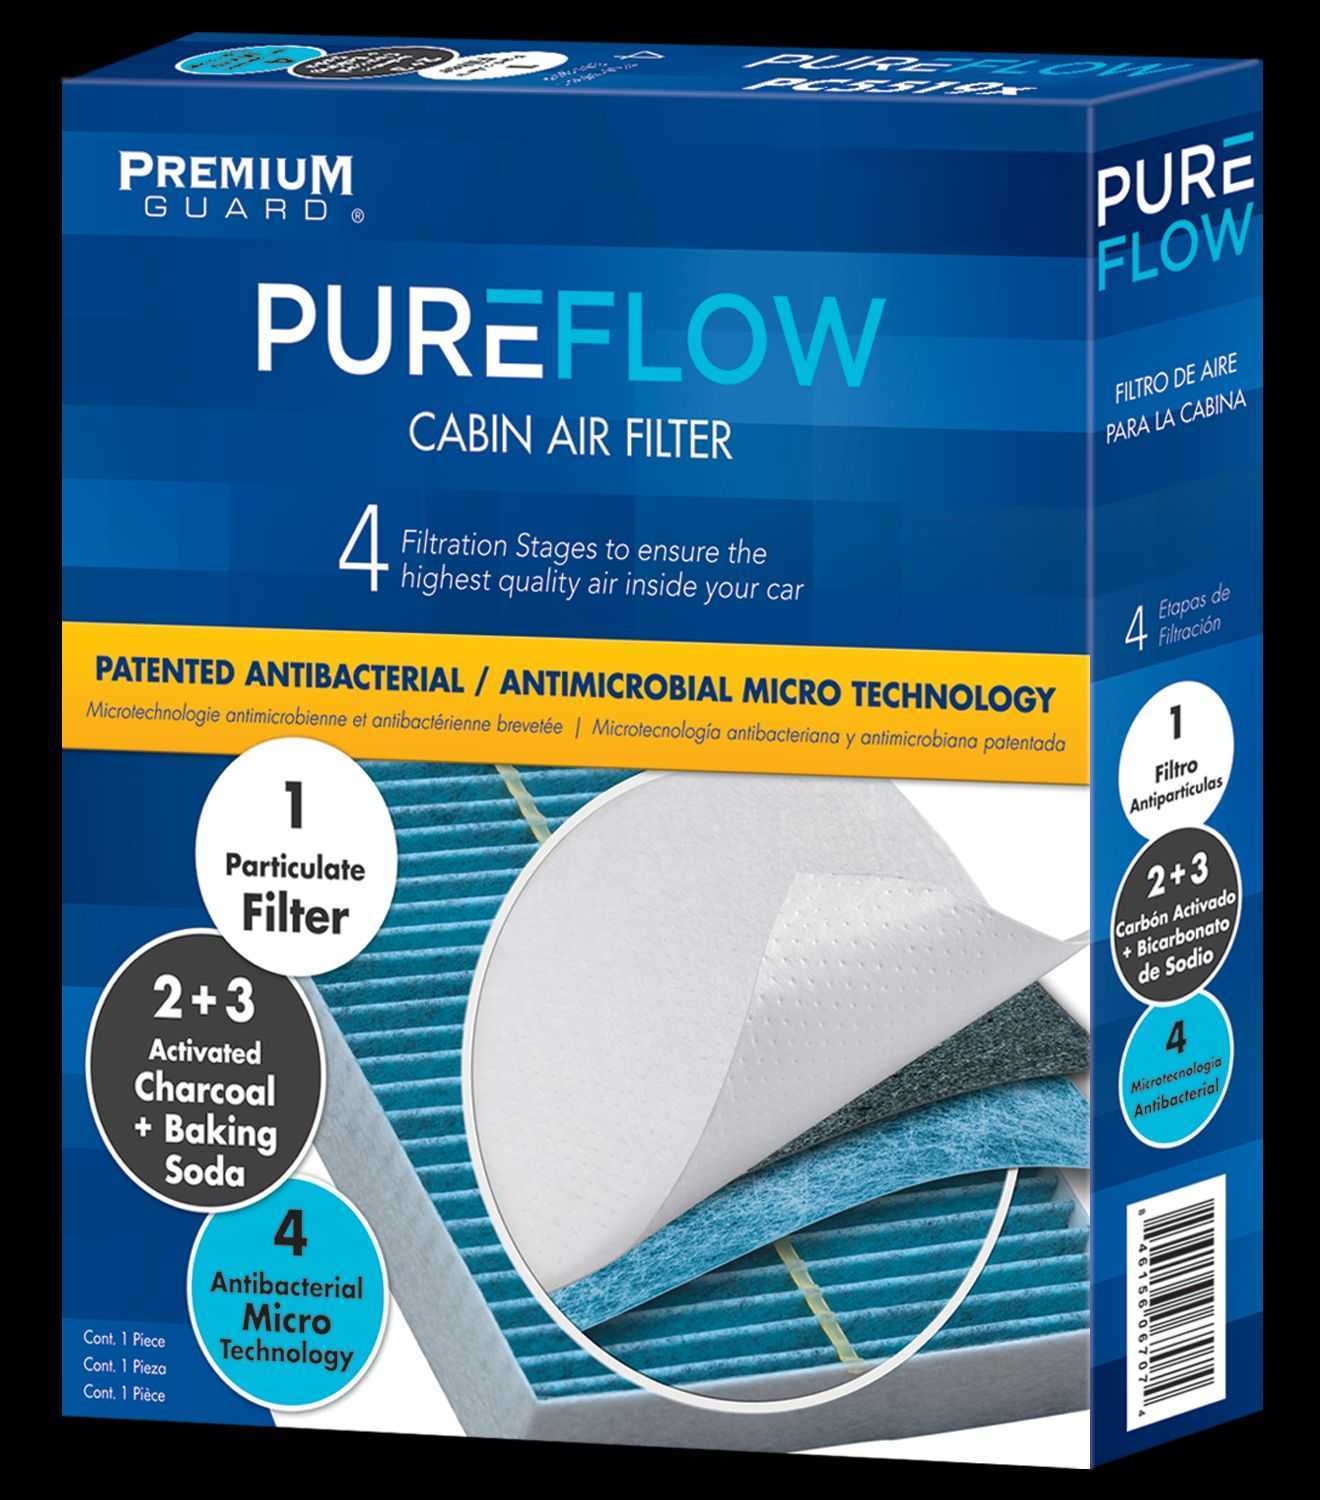 PREMIUM GUARD PUREFLOW - PureFlow - PG6 PC6156X